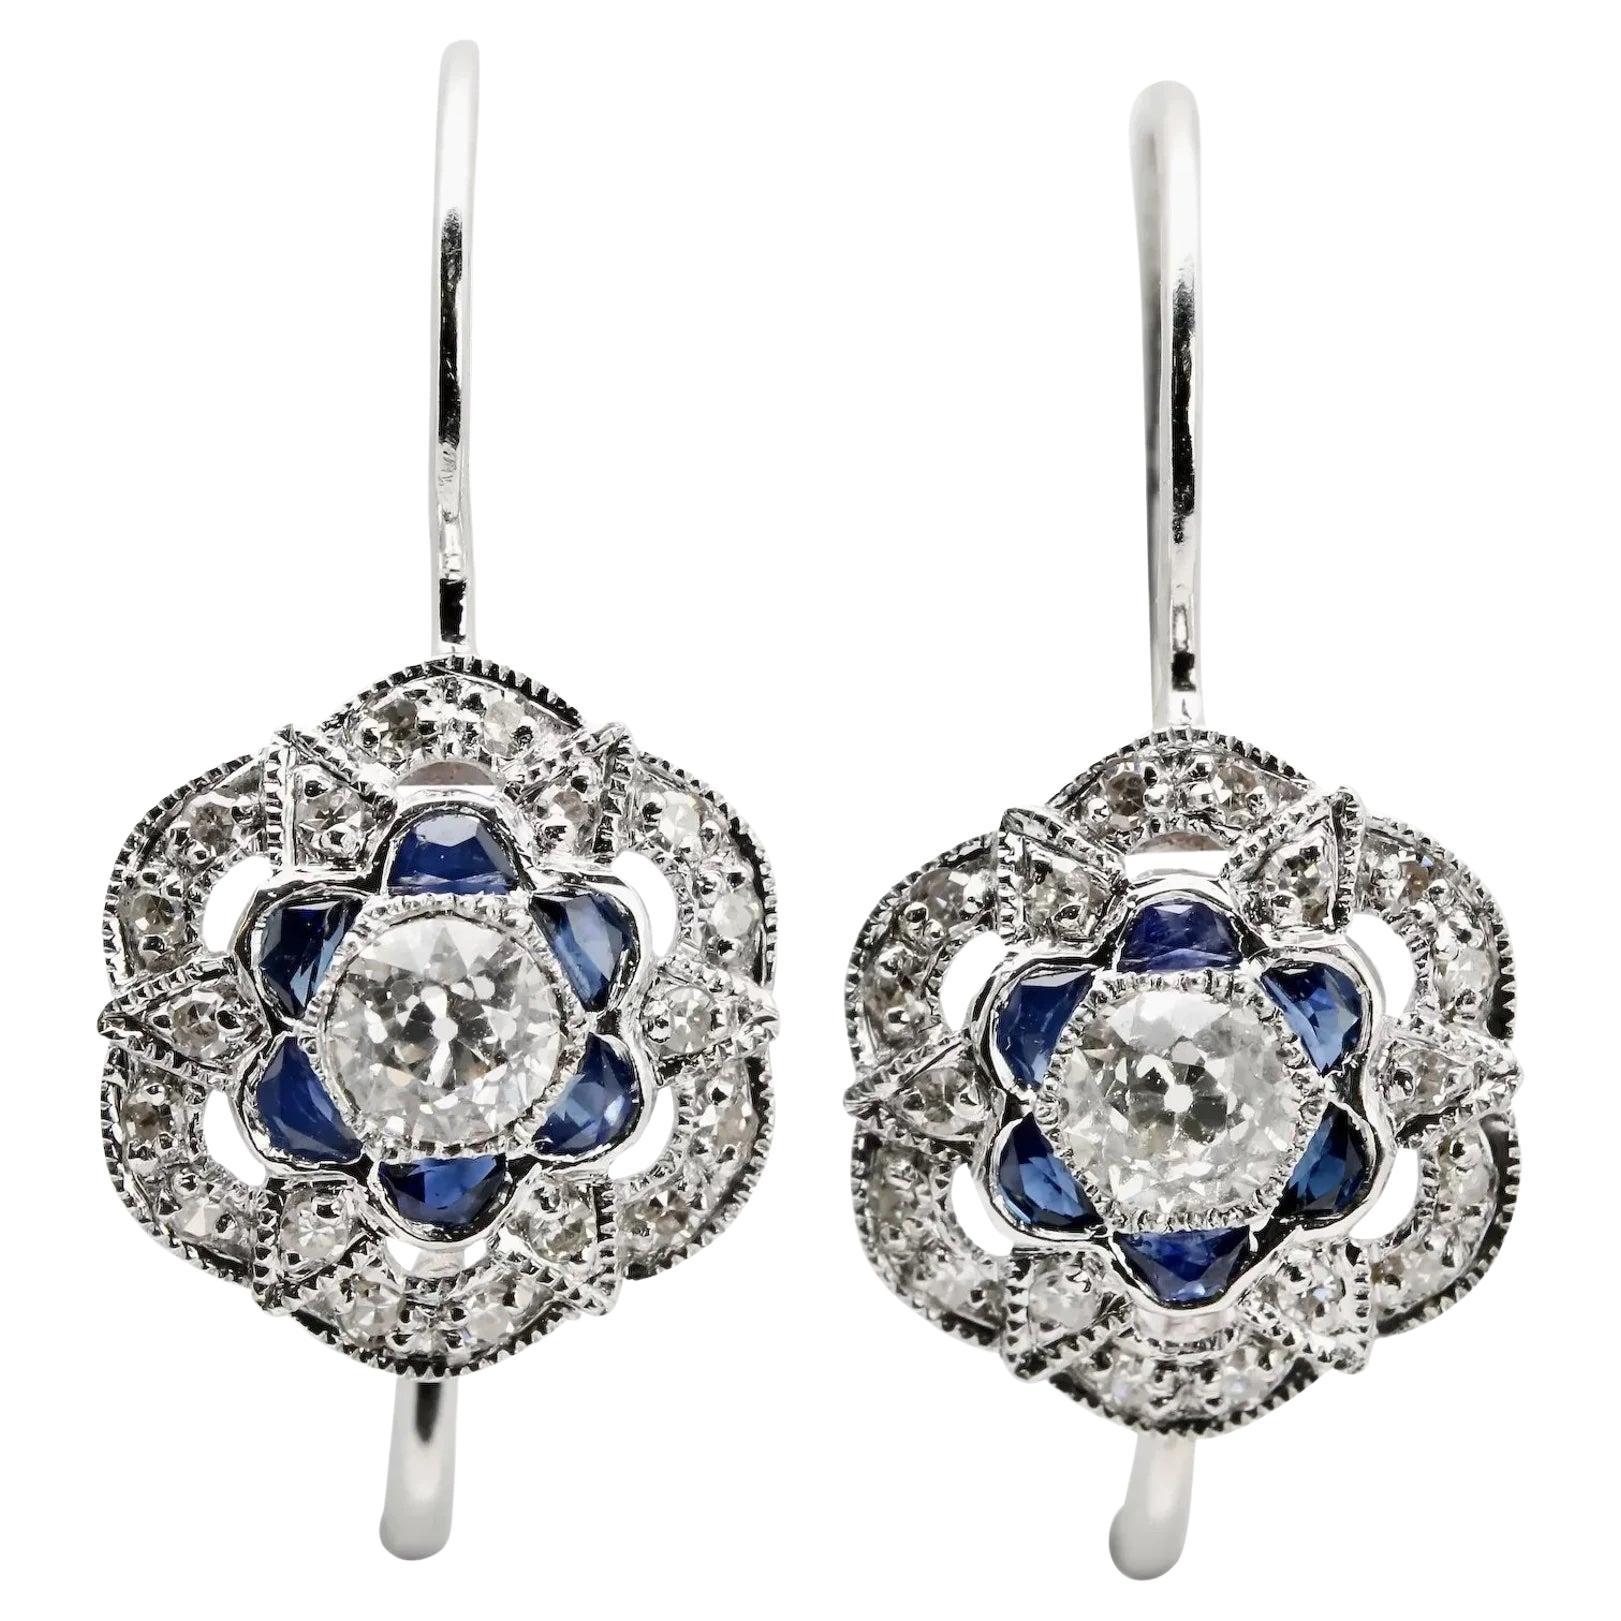 Art Deco Style Diamond & Sapphire Flower Motif Earrings in 14K White Gold